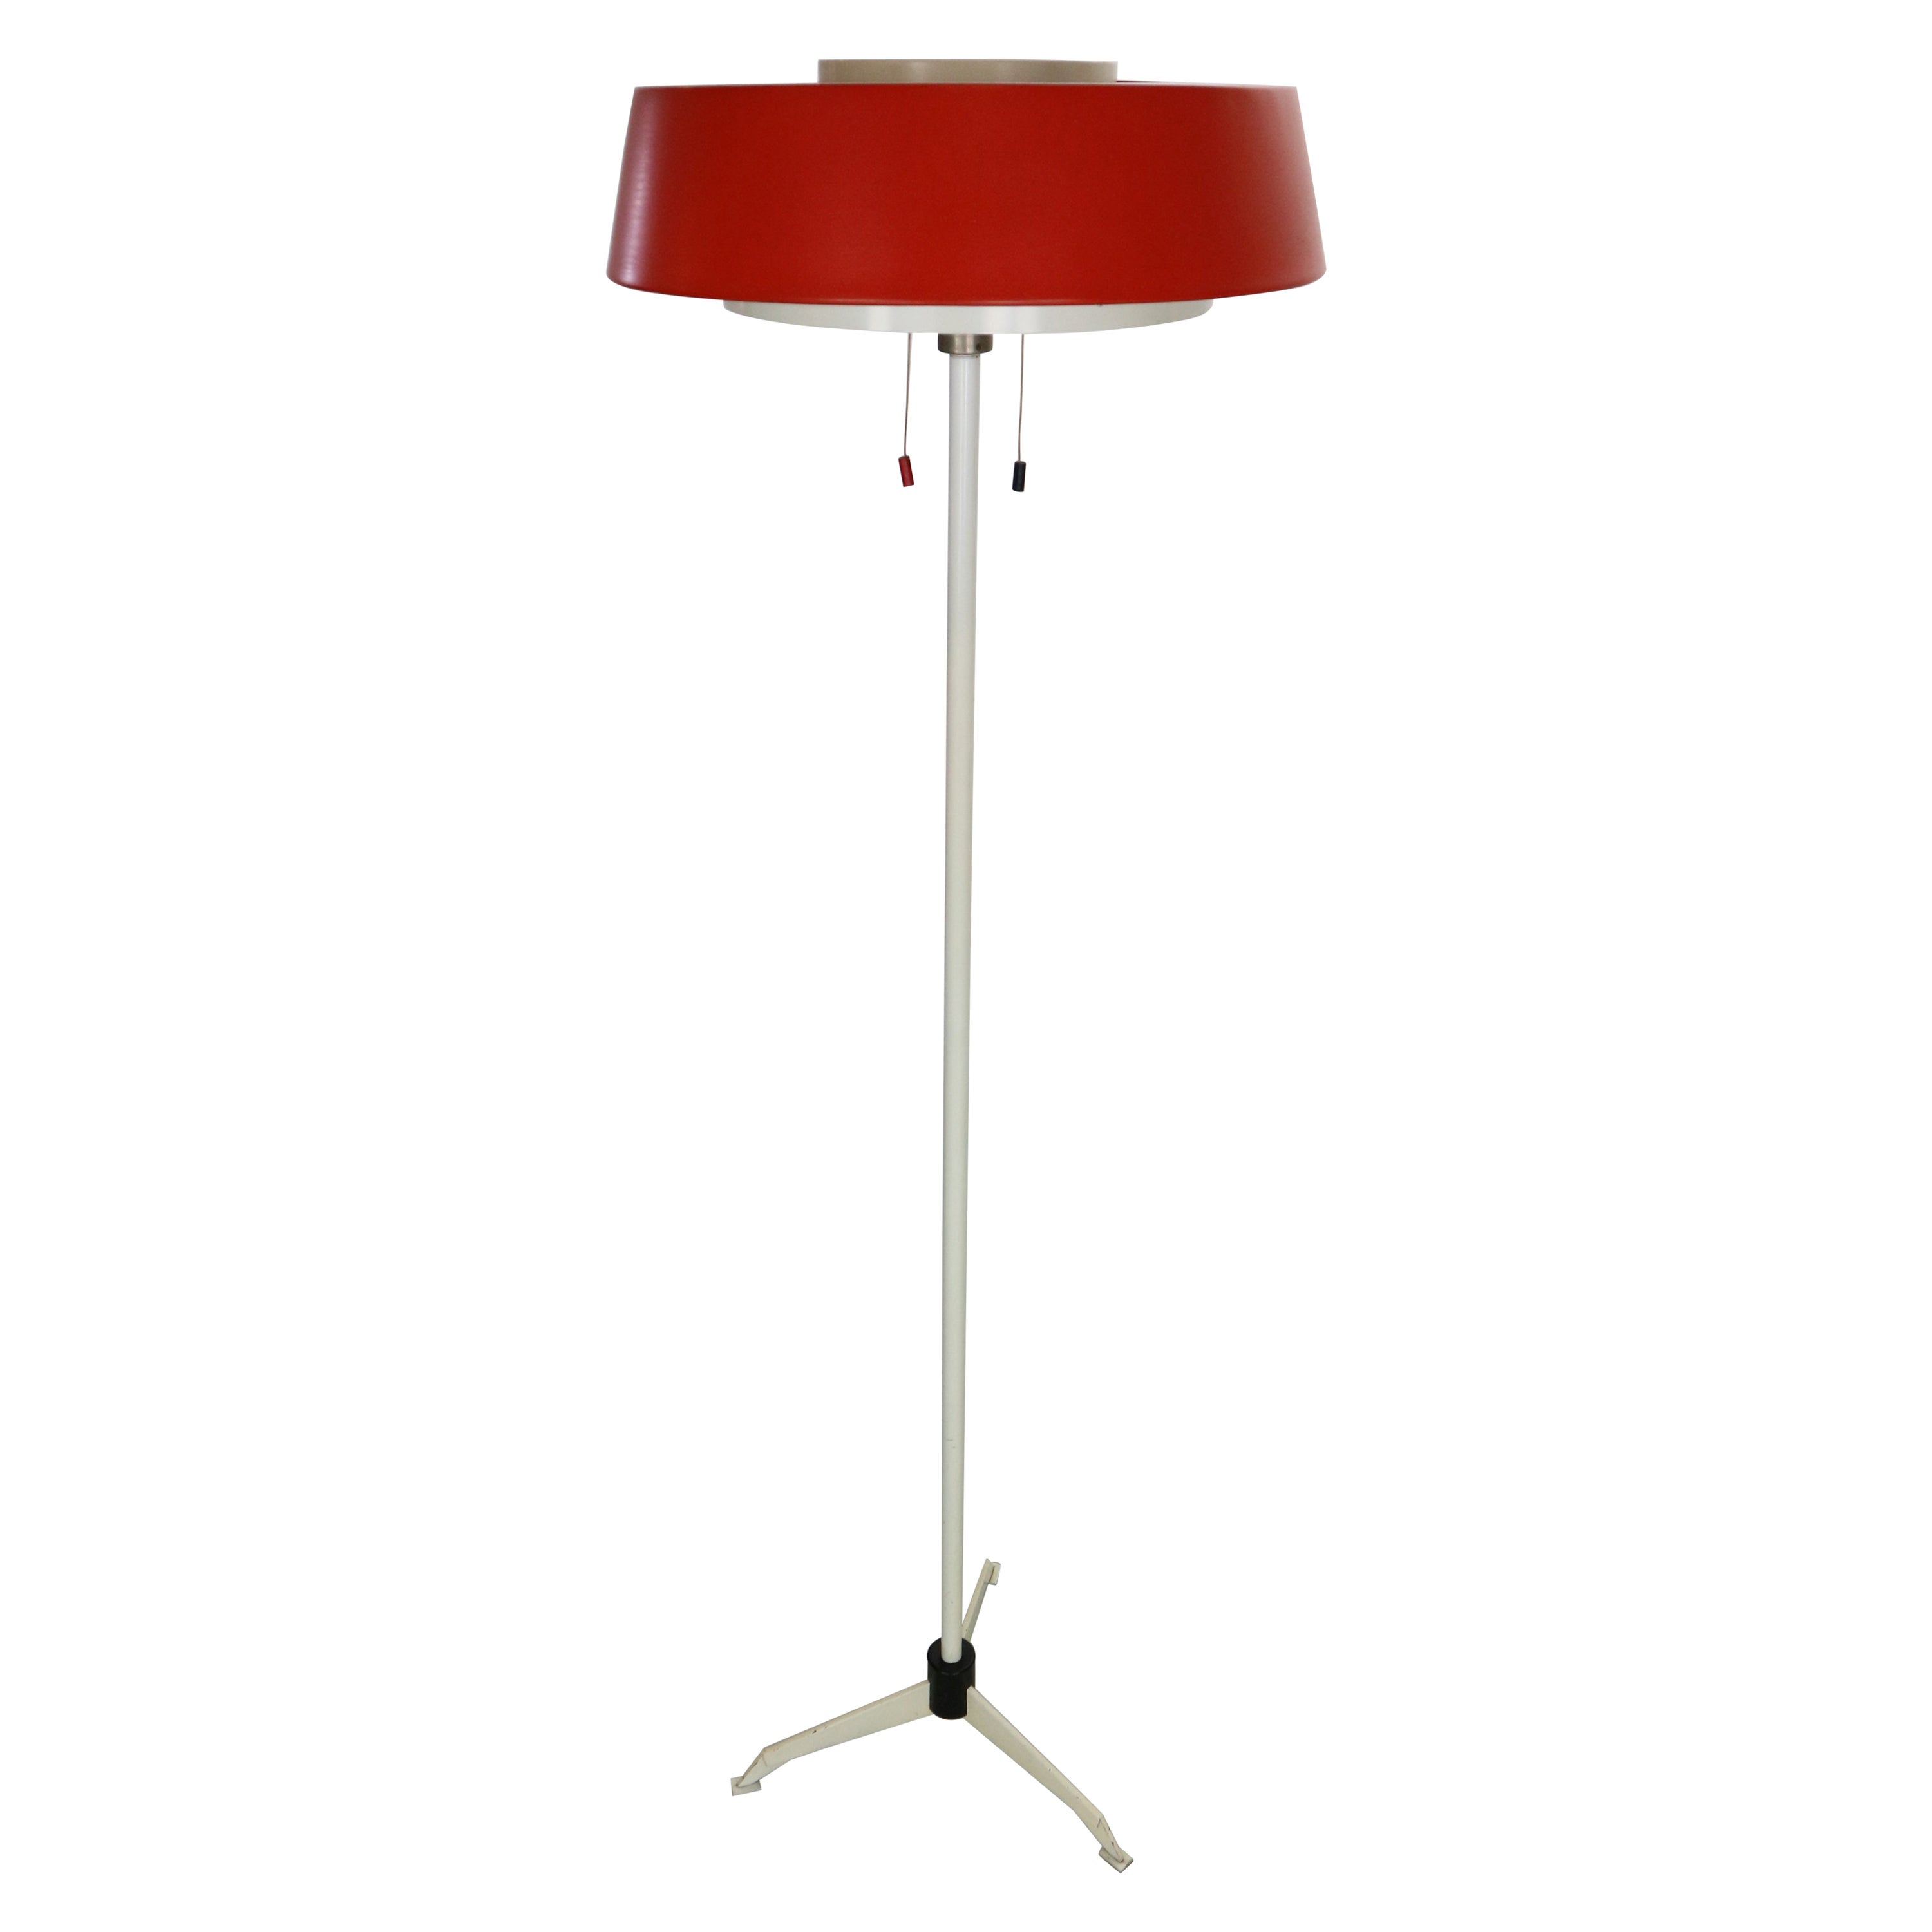 ST 7128 Floor Lamp by Niek Hiemstra for Evolux, Netherlands, 1950s